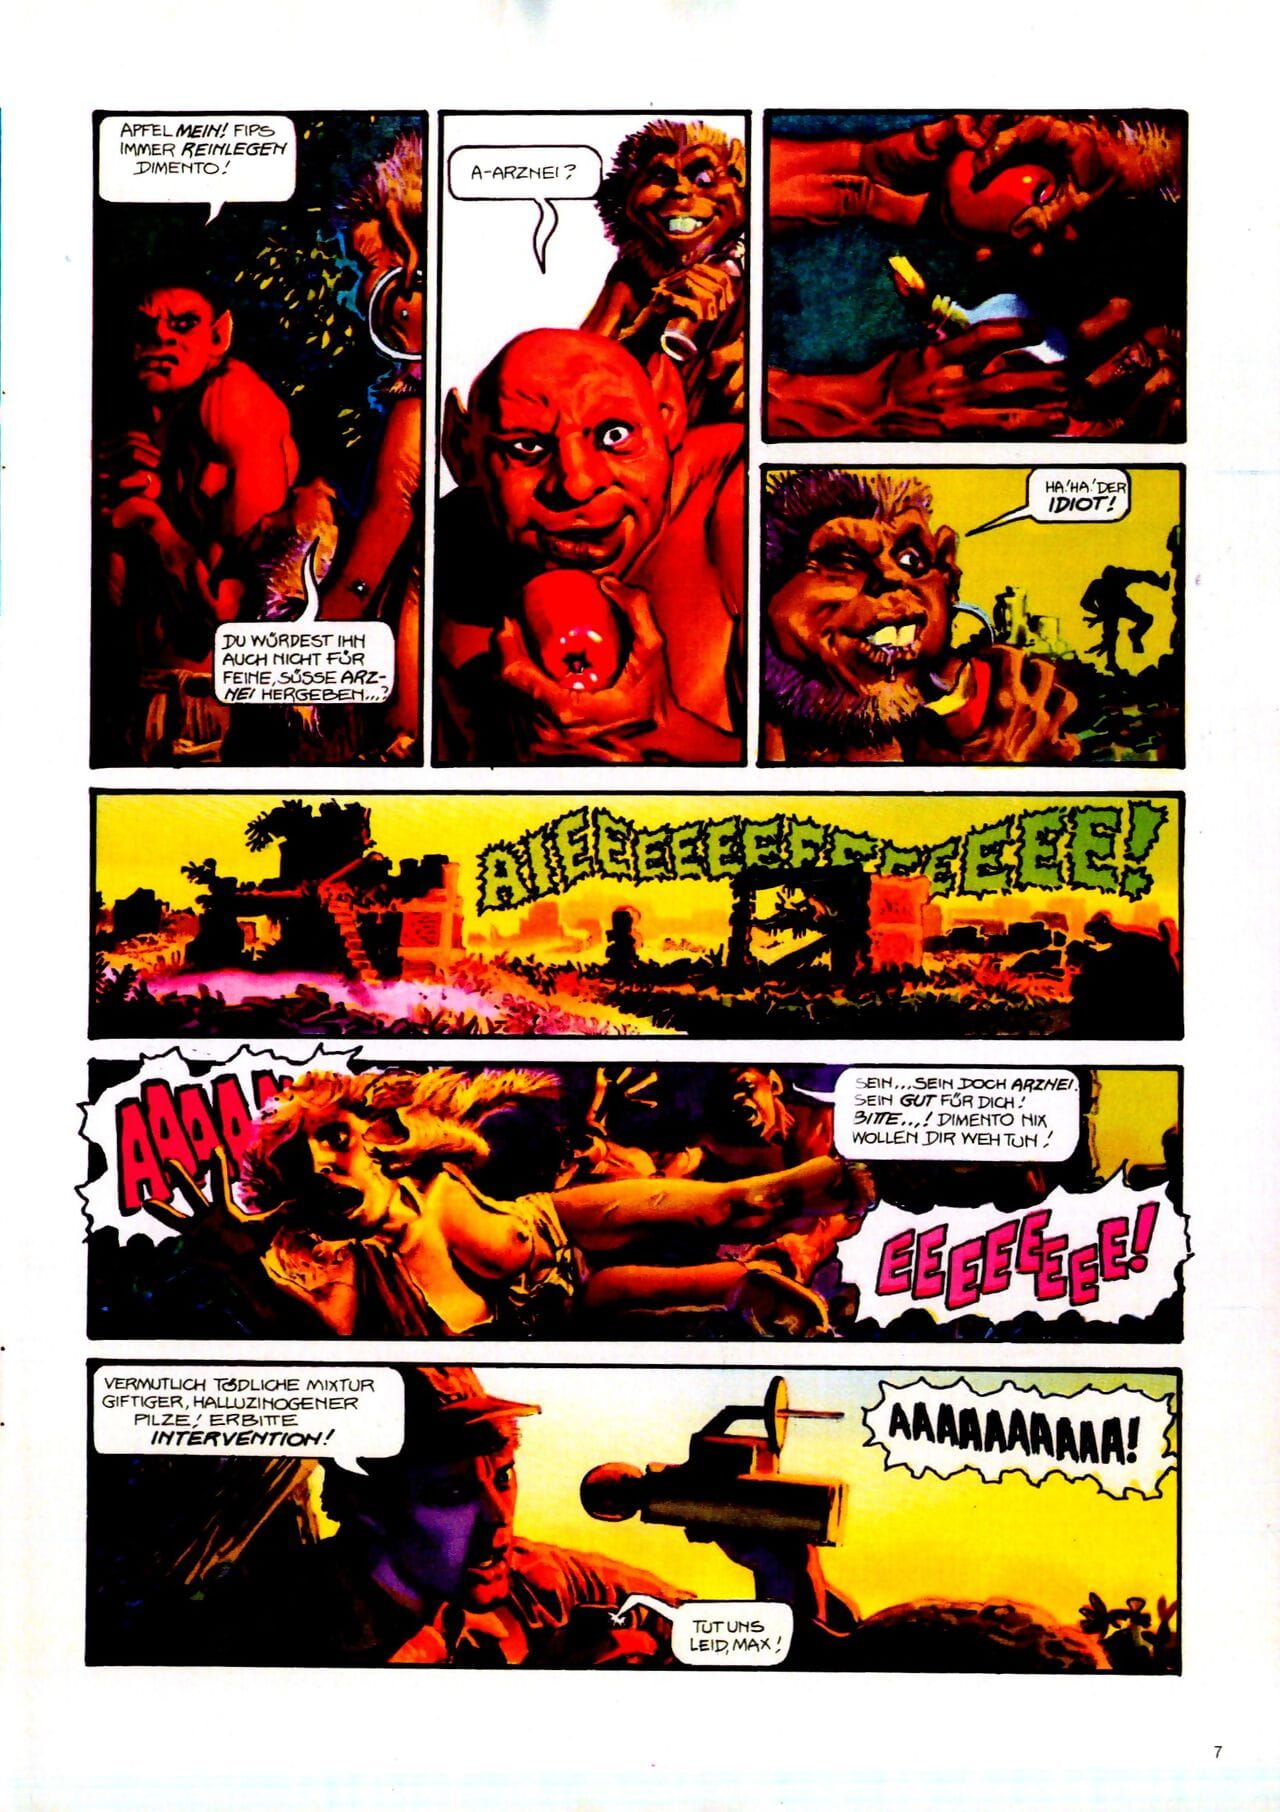 Schwermetall #013 page 1